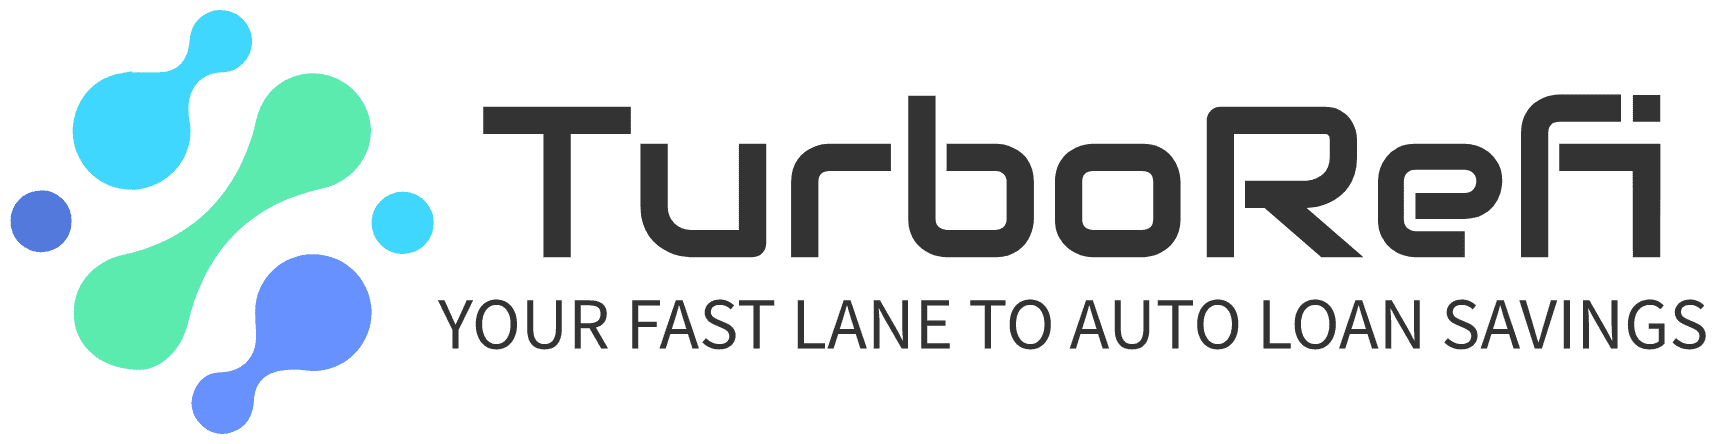 TurboRefi logo